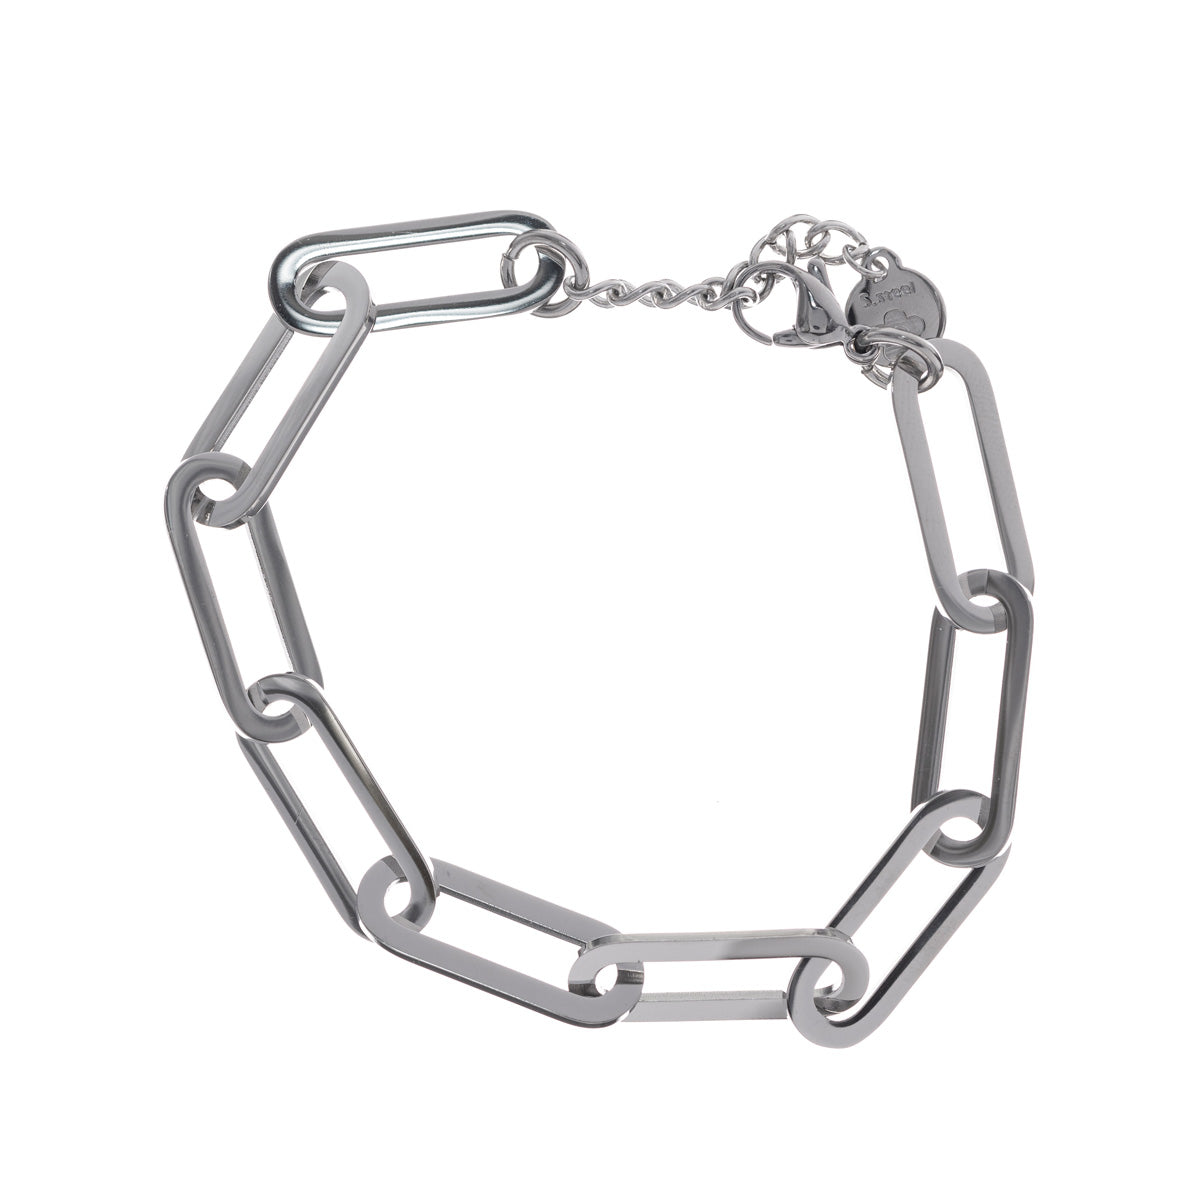 Steel cable chain bracelet 0,8cm wide